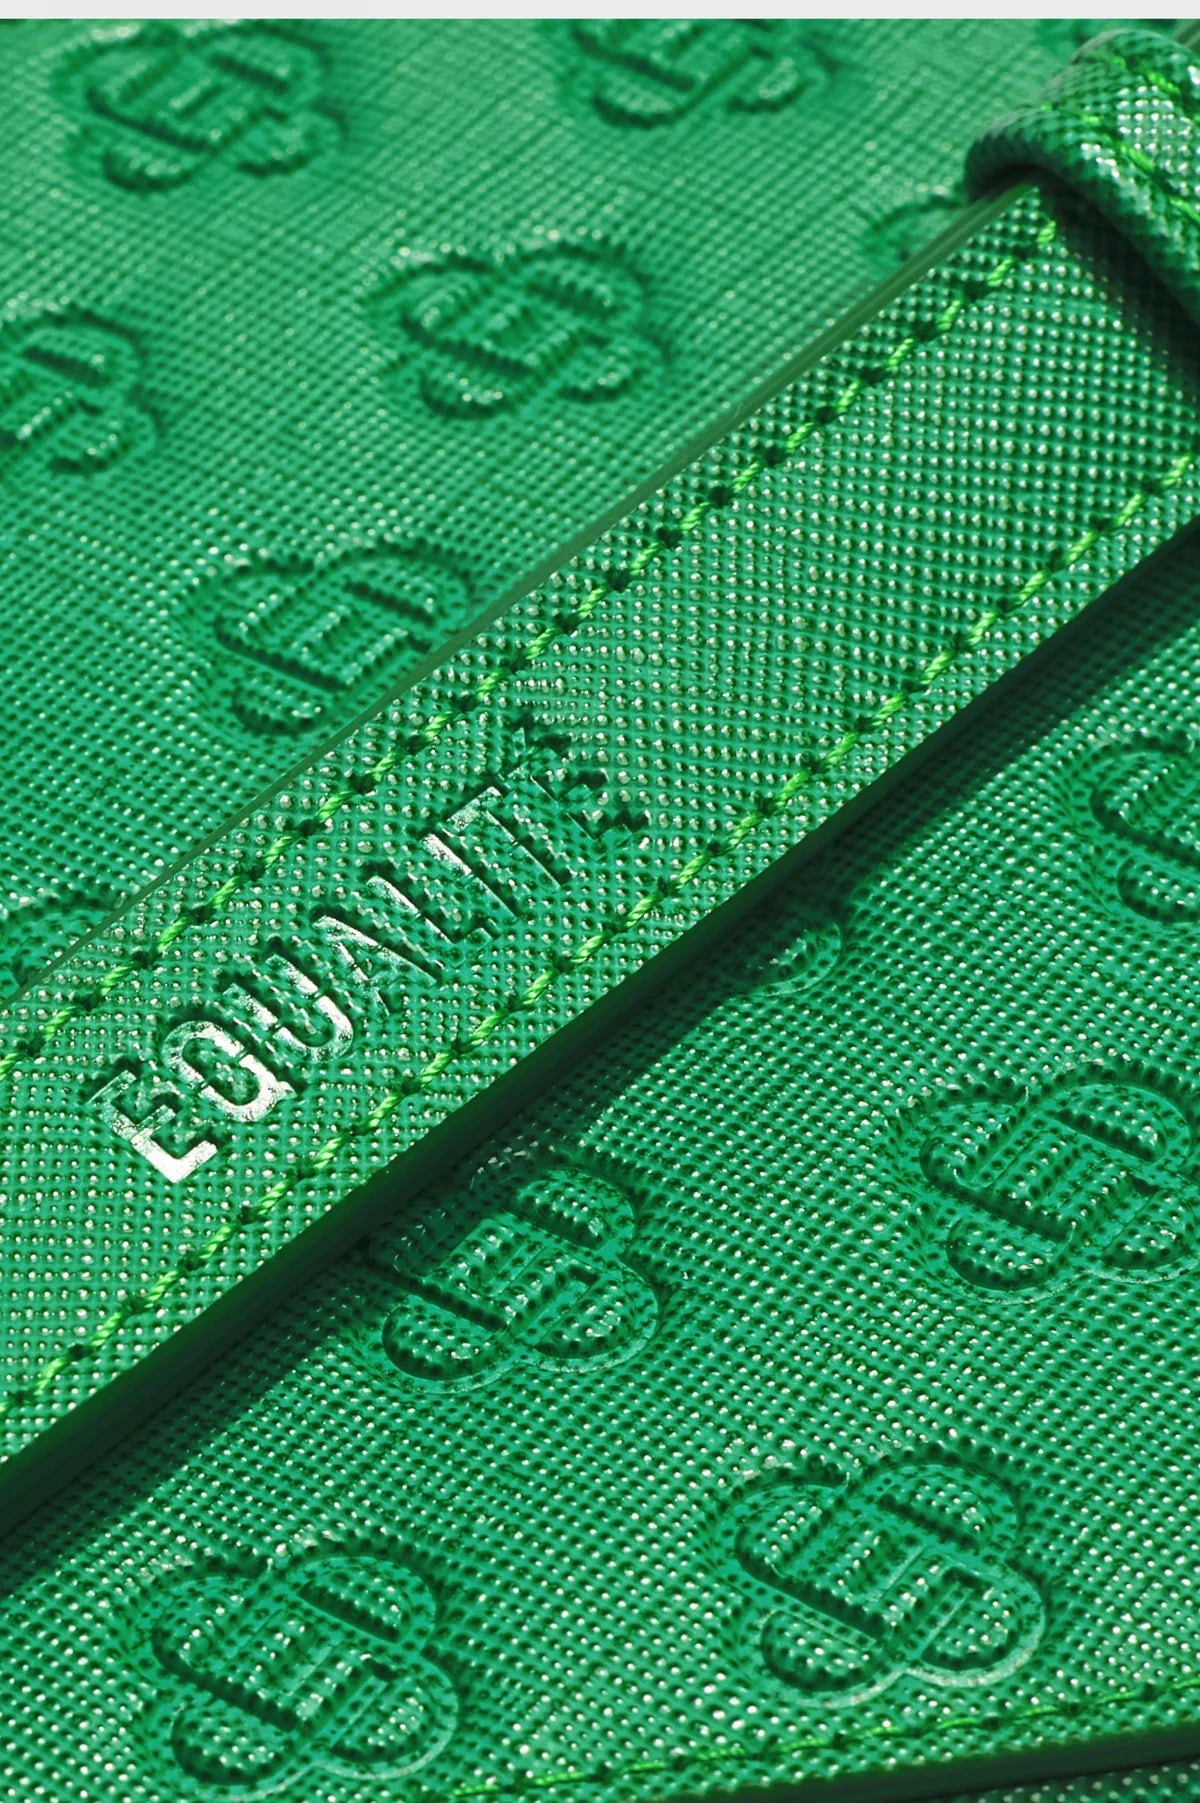 Equalite Pattern Bag 2.0 Groen